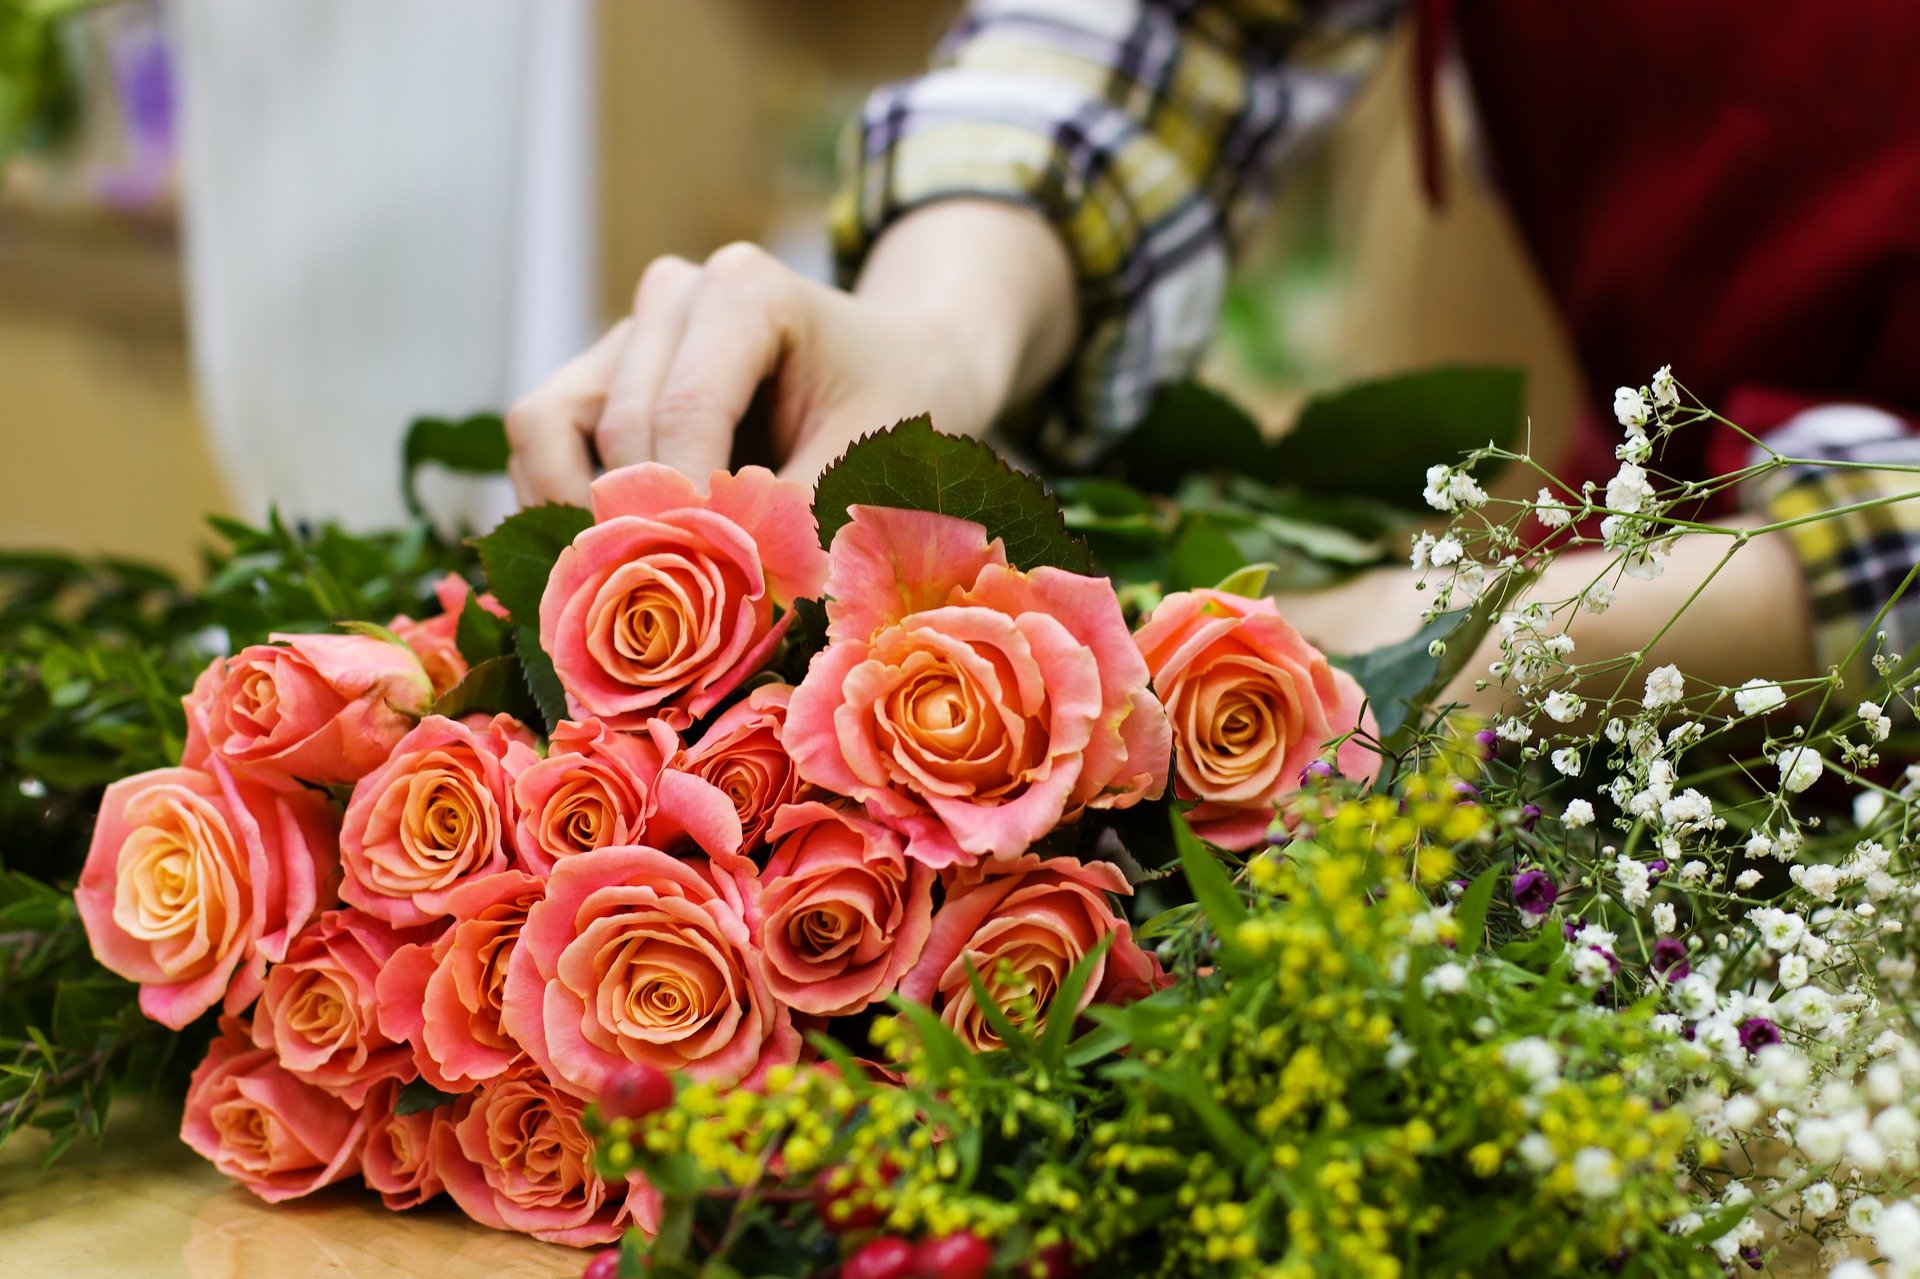 A florist putting together a bouquet. | Photo: Pixabay/Anastasia Gepp